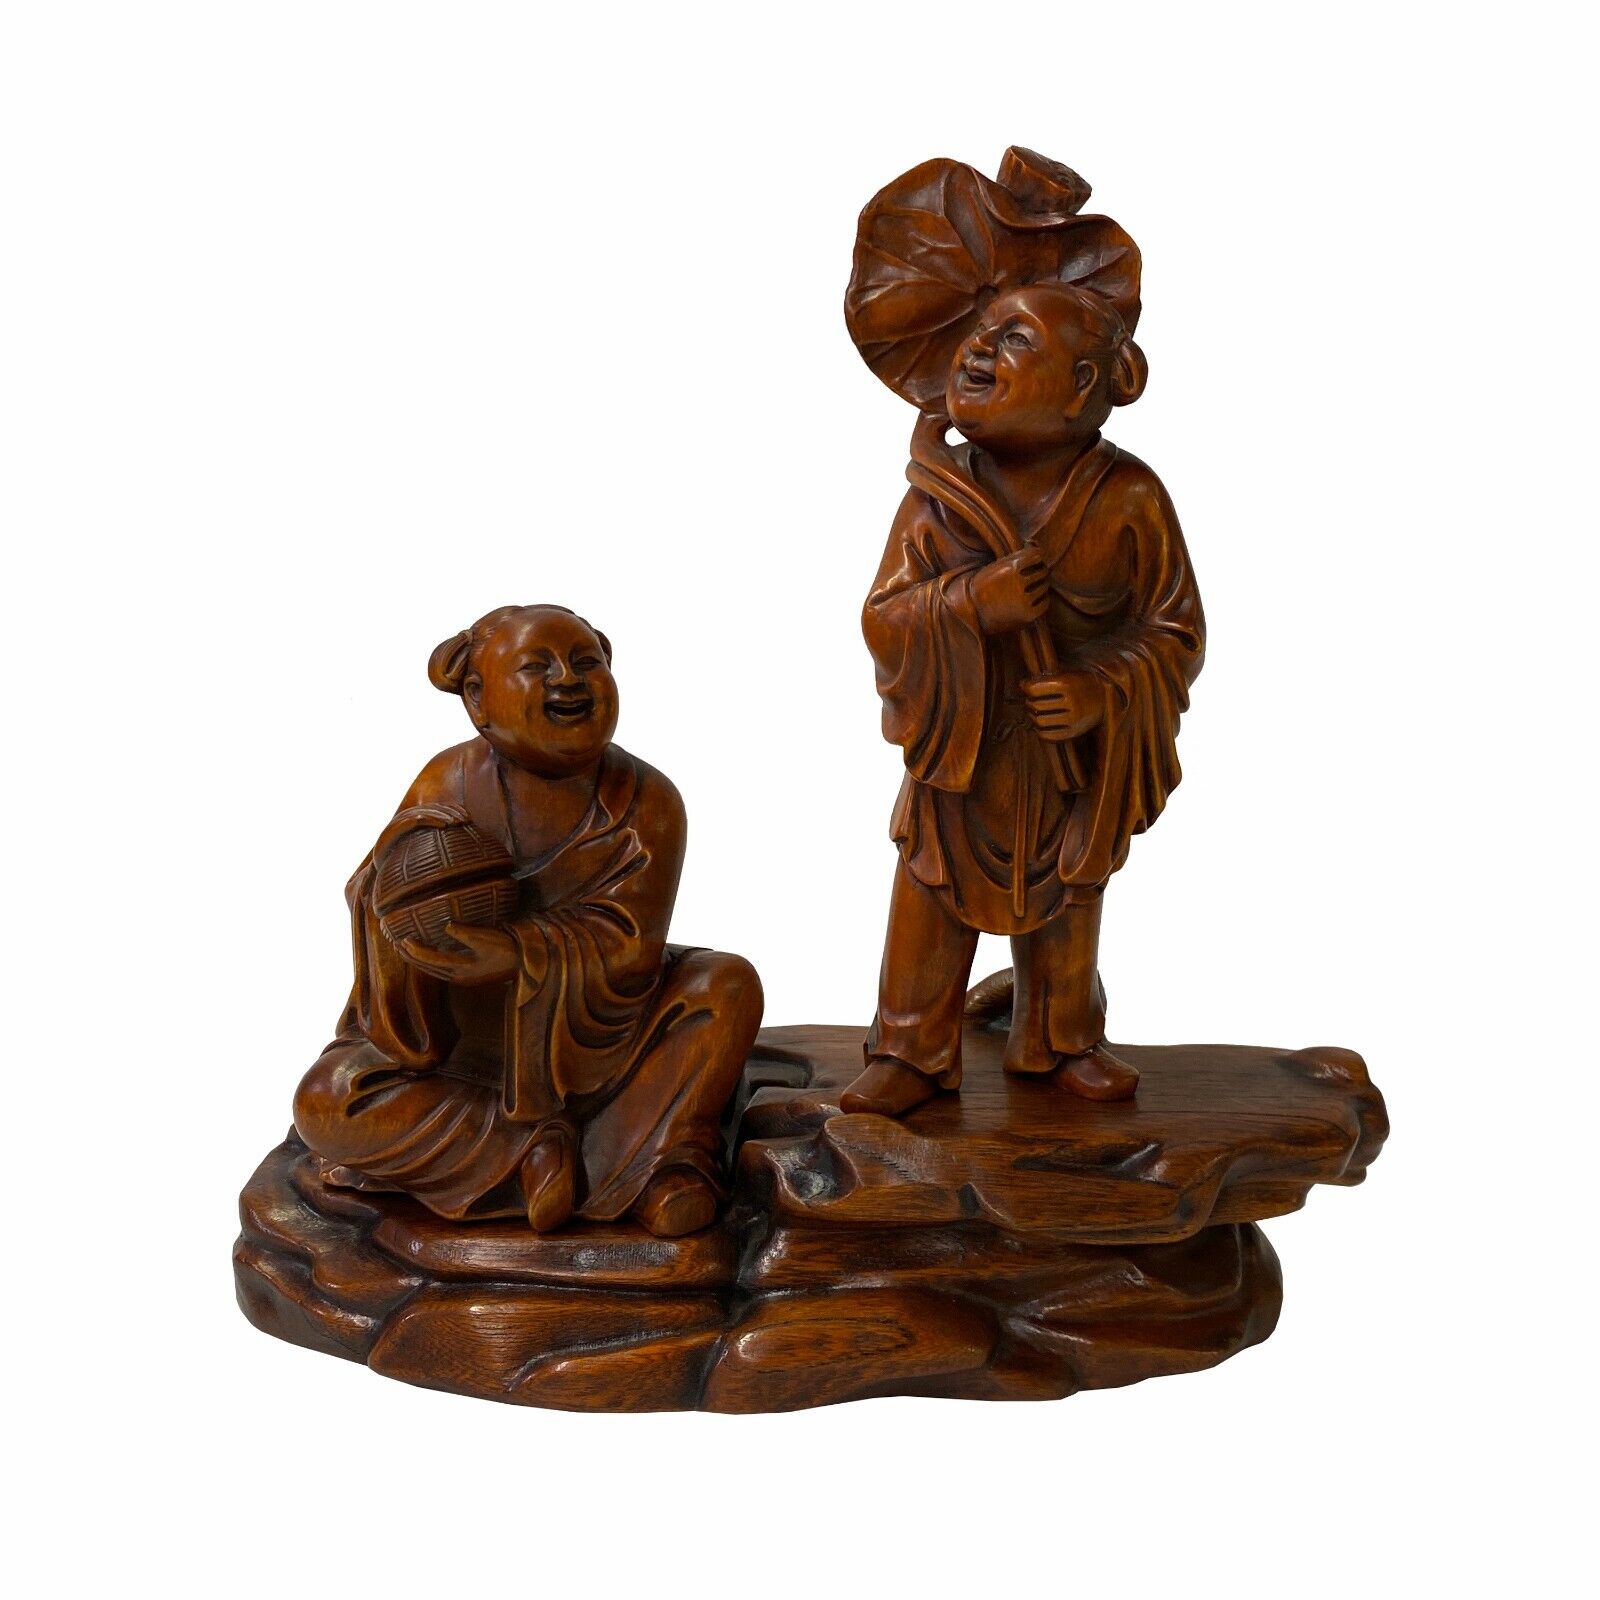 Chinese Oriental Wood Artistic Golden Kids Carving Display Figure Art ws1843